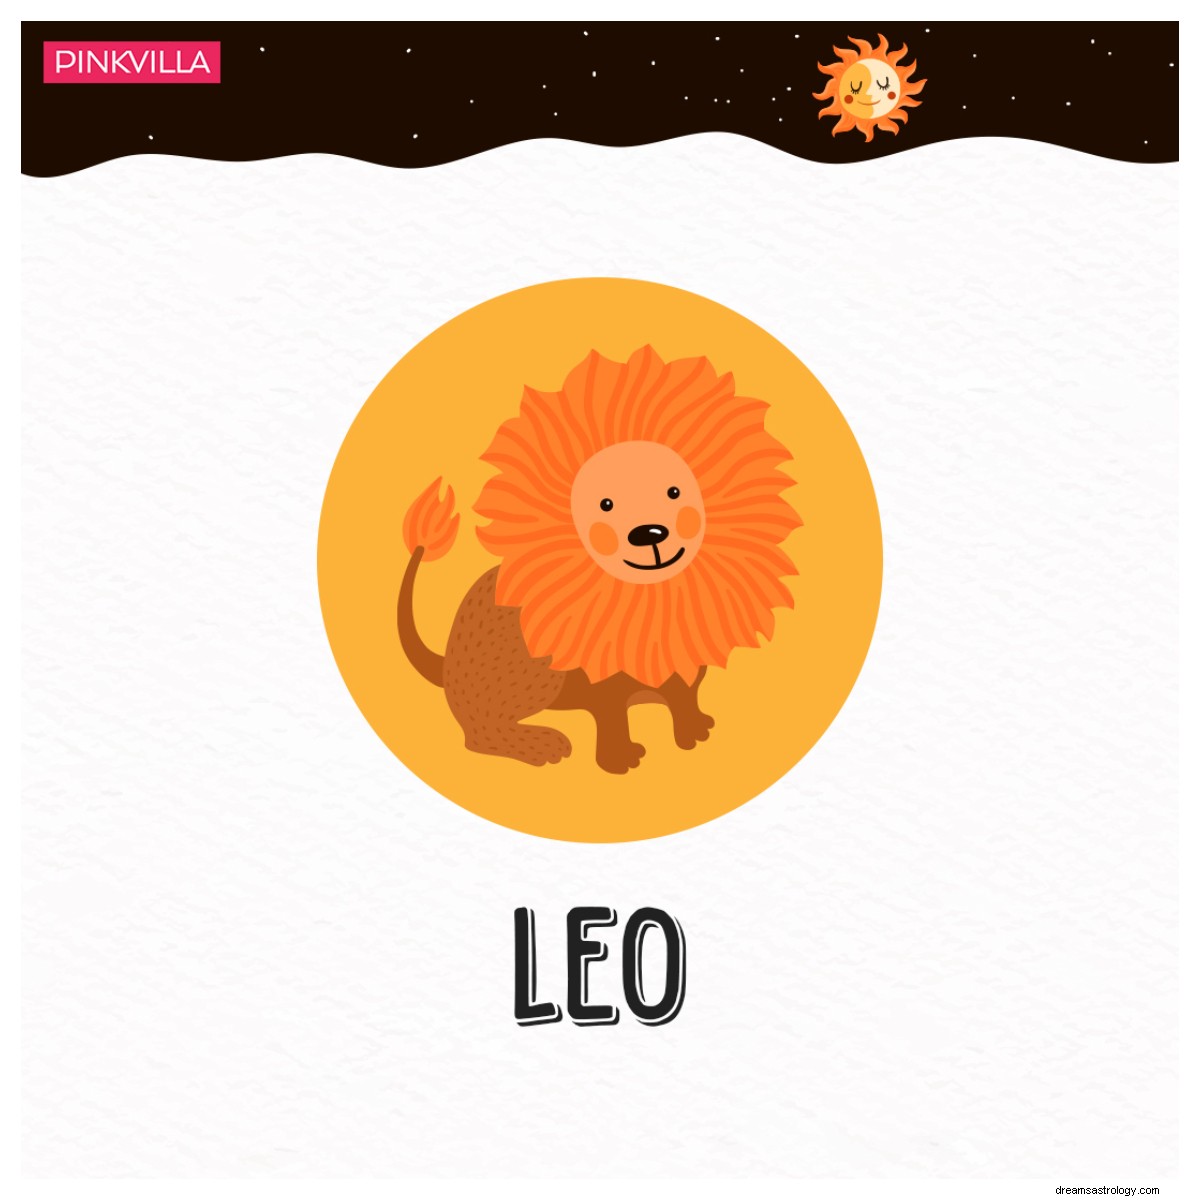 De Piscis a Leo:signos del zodiaco que luchan por establecer límites 